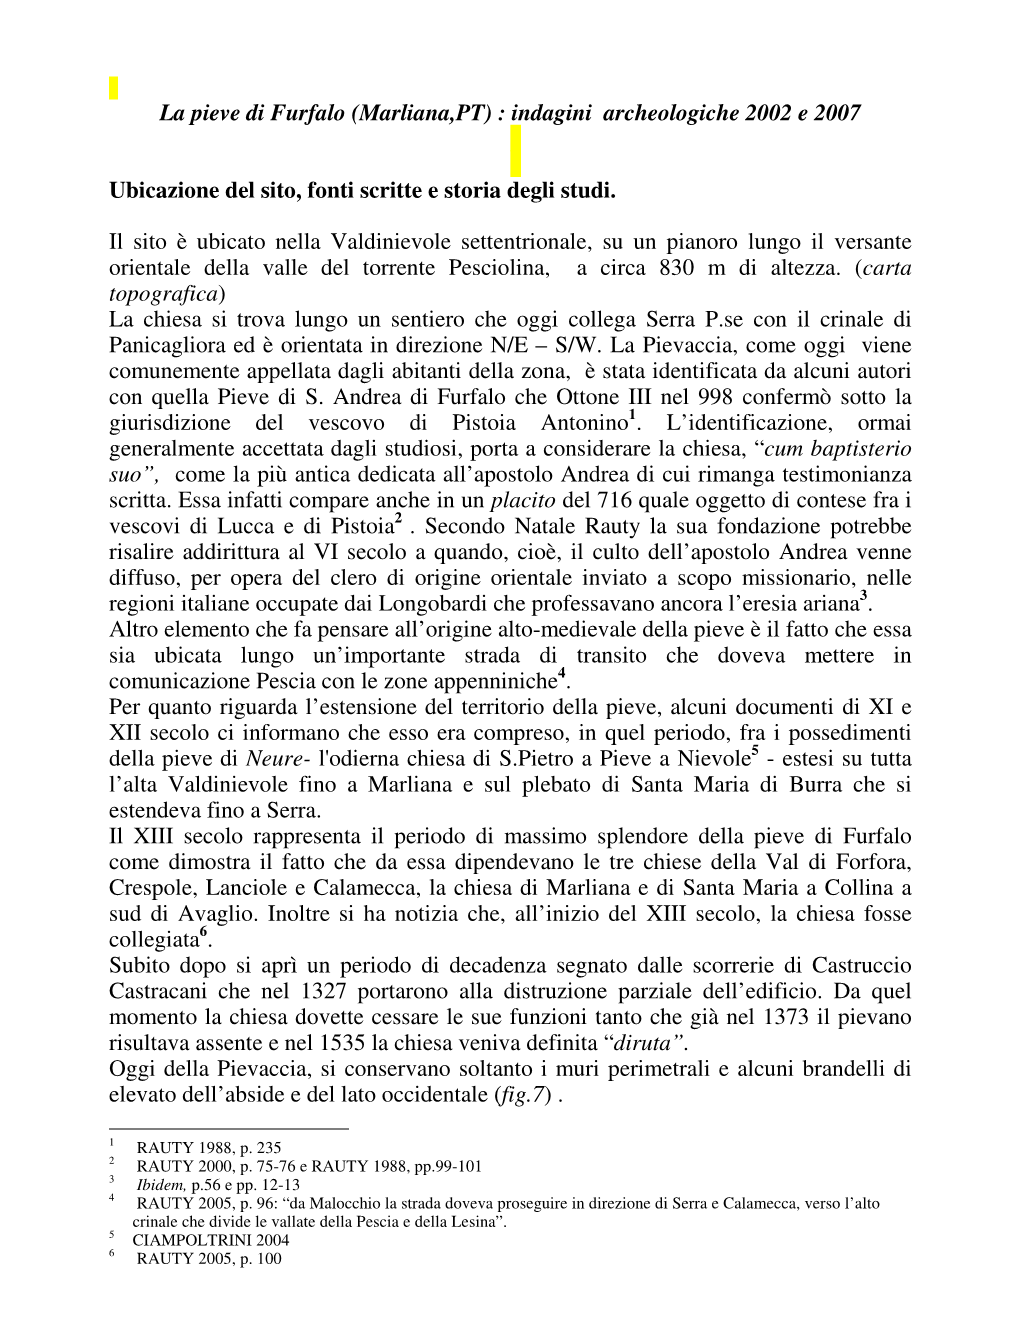 La Pieve Di Furfalo (Marliana,PT) : Indagini Archeologiche 2002 E 2007